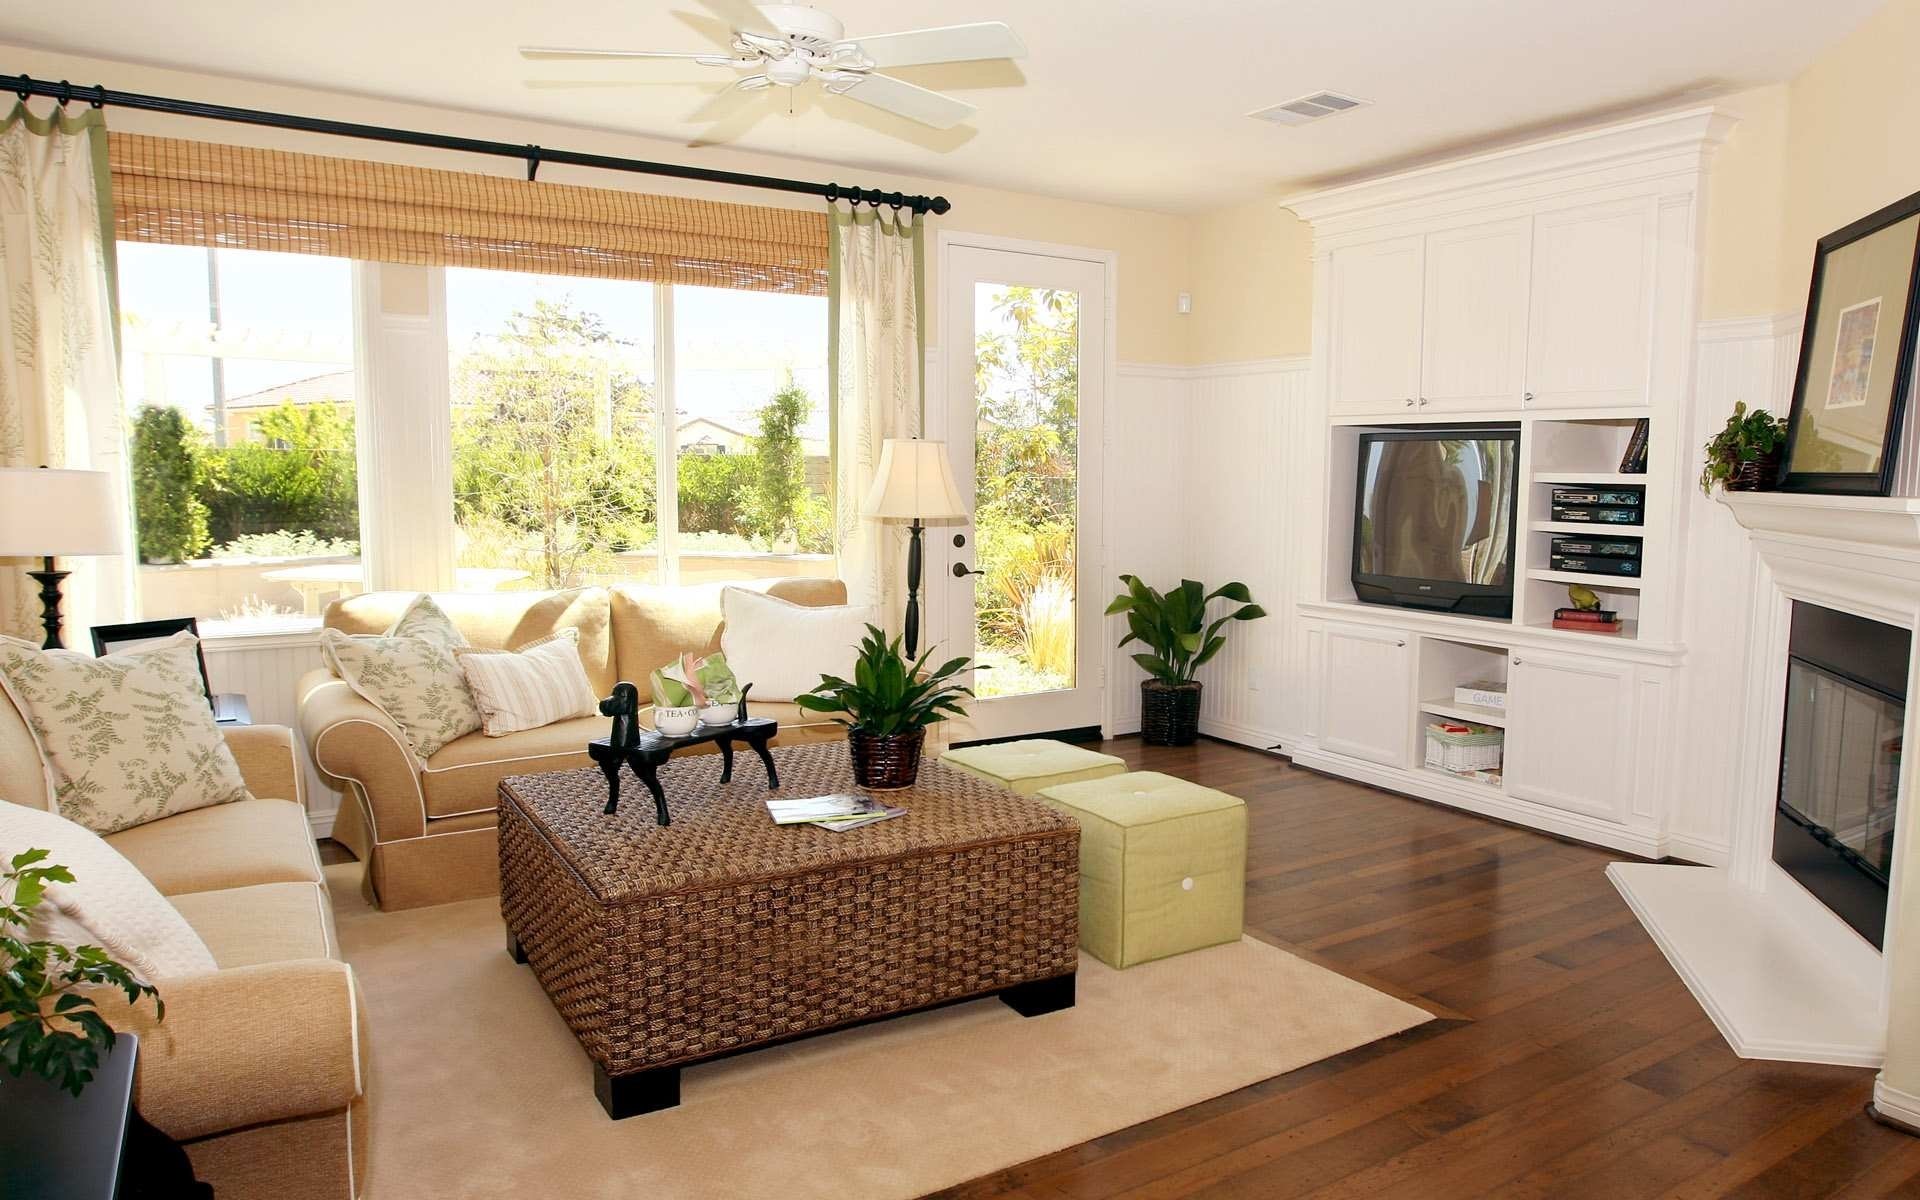 10 Stylish Home Decor Ideas Living Room amazing of affordable home interior design ideas for livi 3680 2 2022